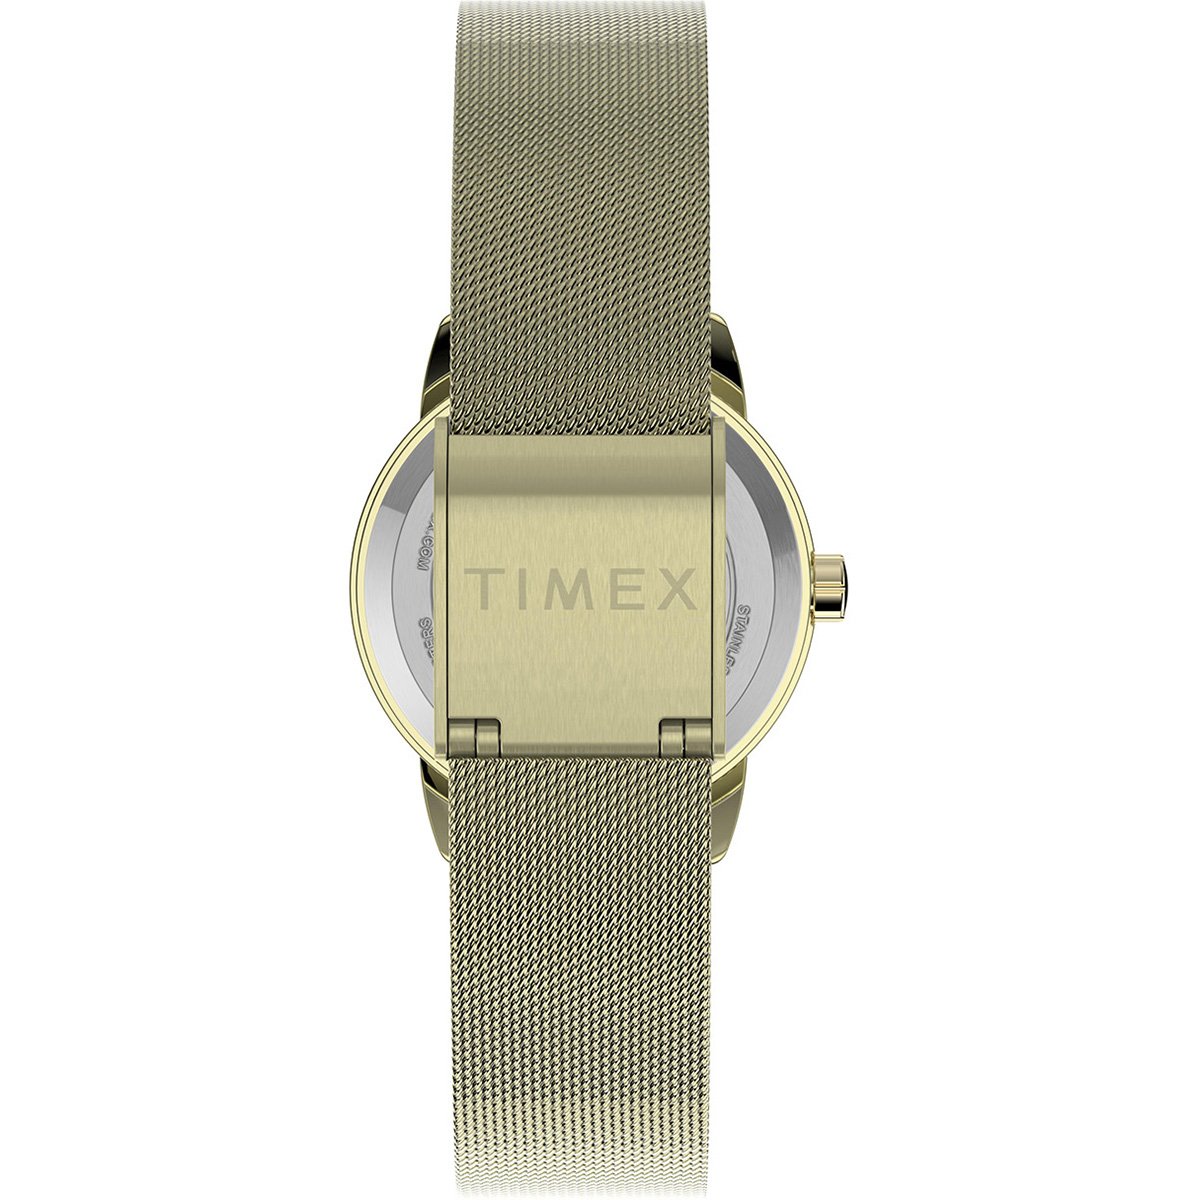 Reloj Dorado para Mujer Timex